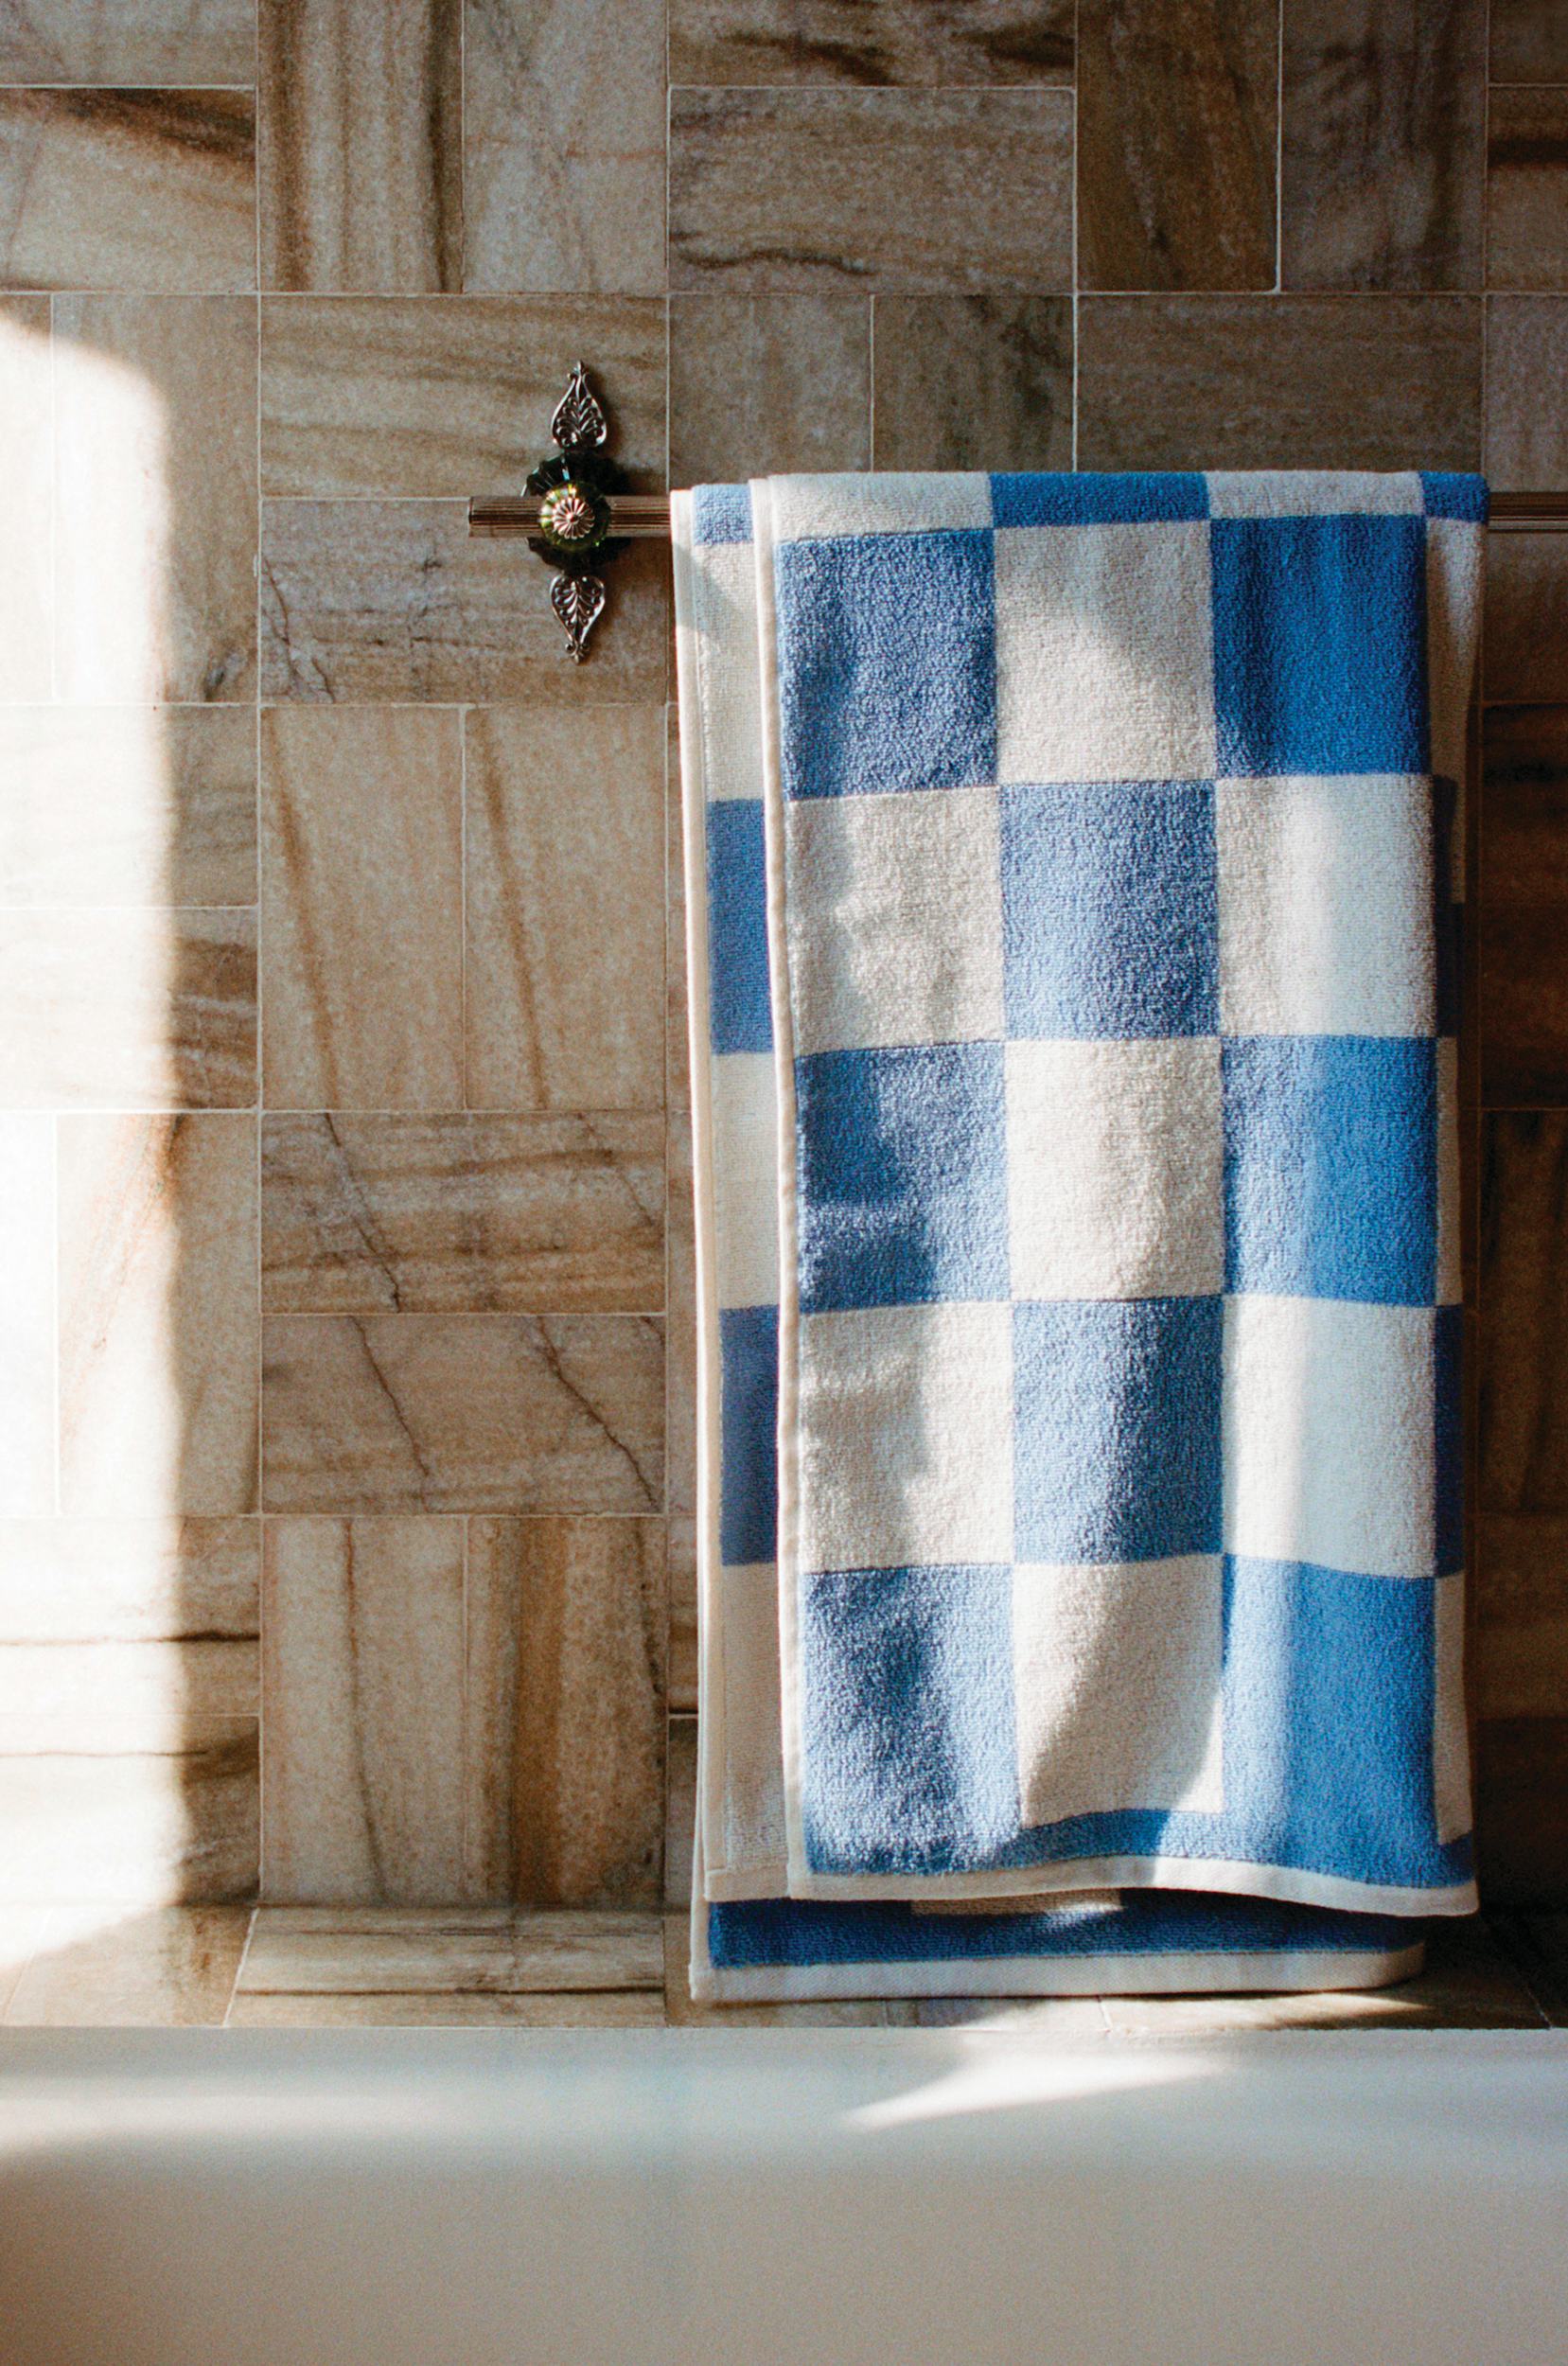 Hay Check Bath Towel in Matcha